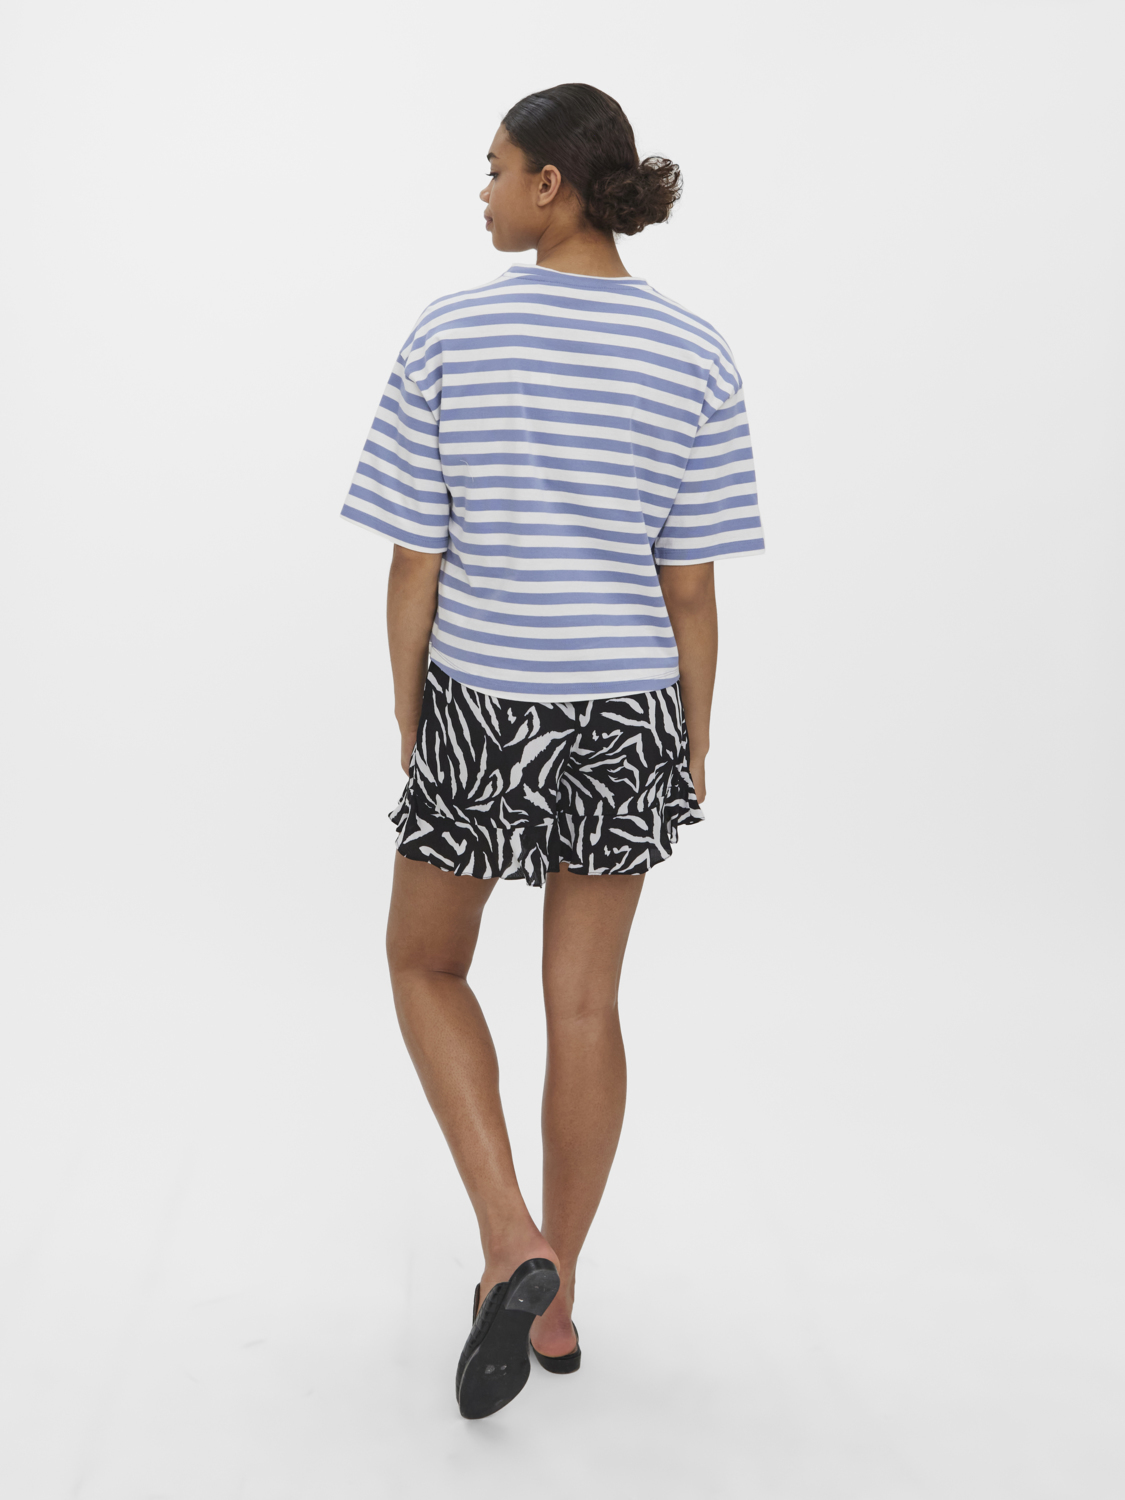 FINAL SALE - Kelly oversized striped t-shirt, INFINITY, large